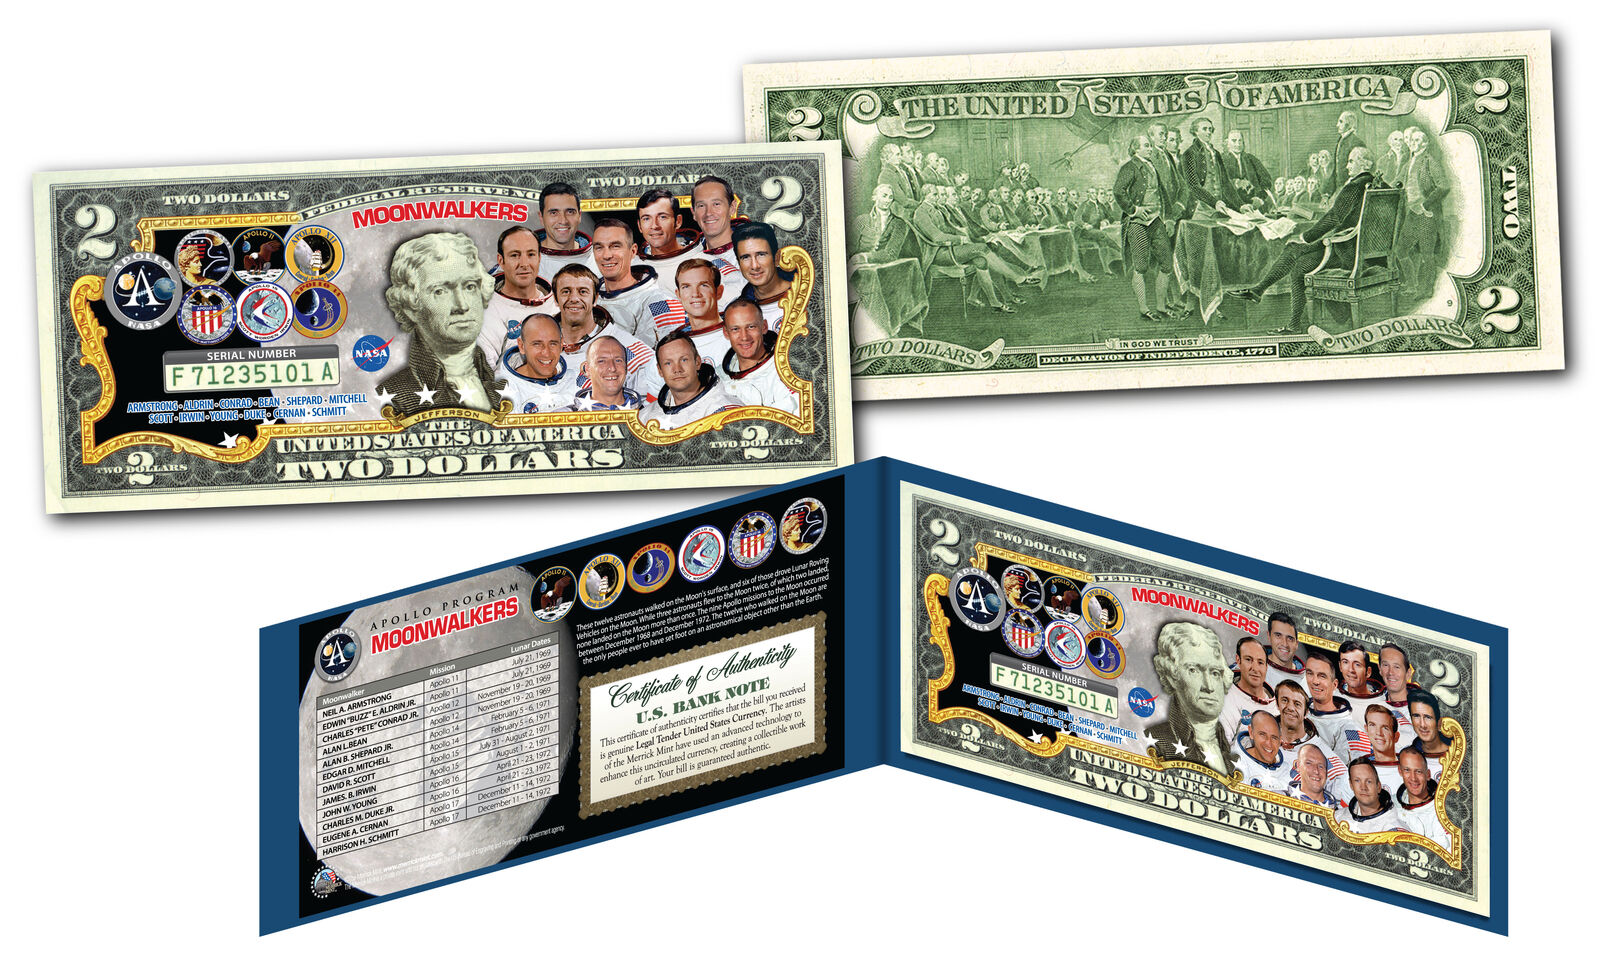 MOONWALKERS 12 Astronauts To Ever Walk On Moon Apollo NASA Official U.S. $2 Bill